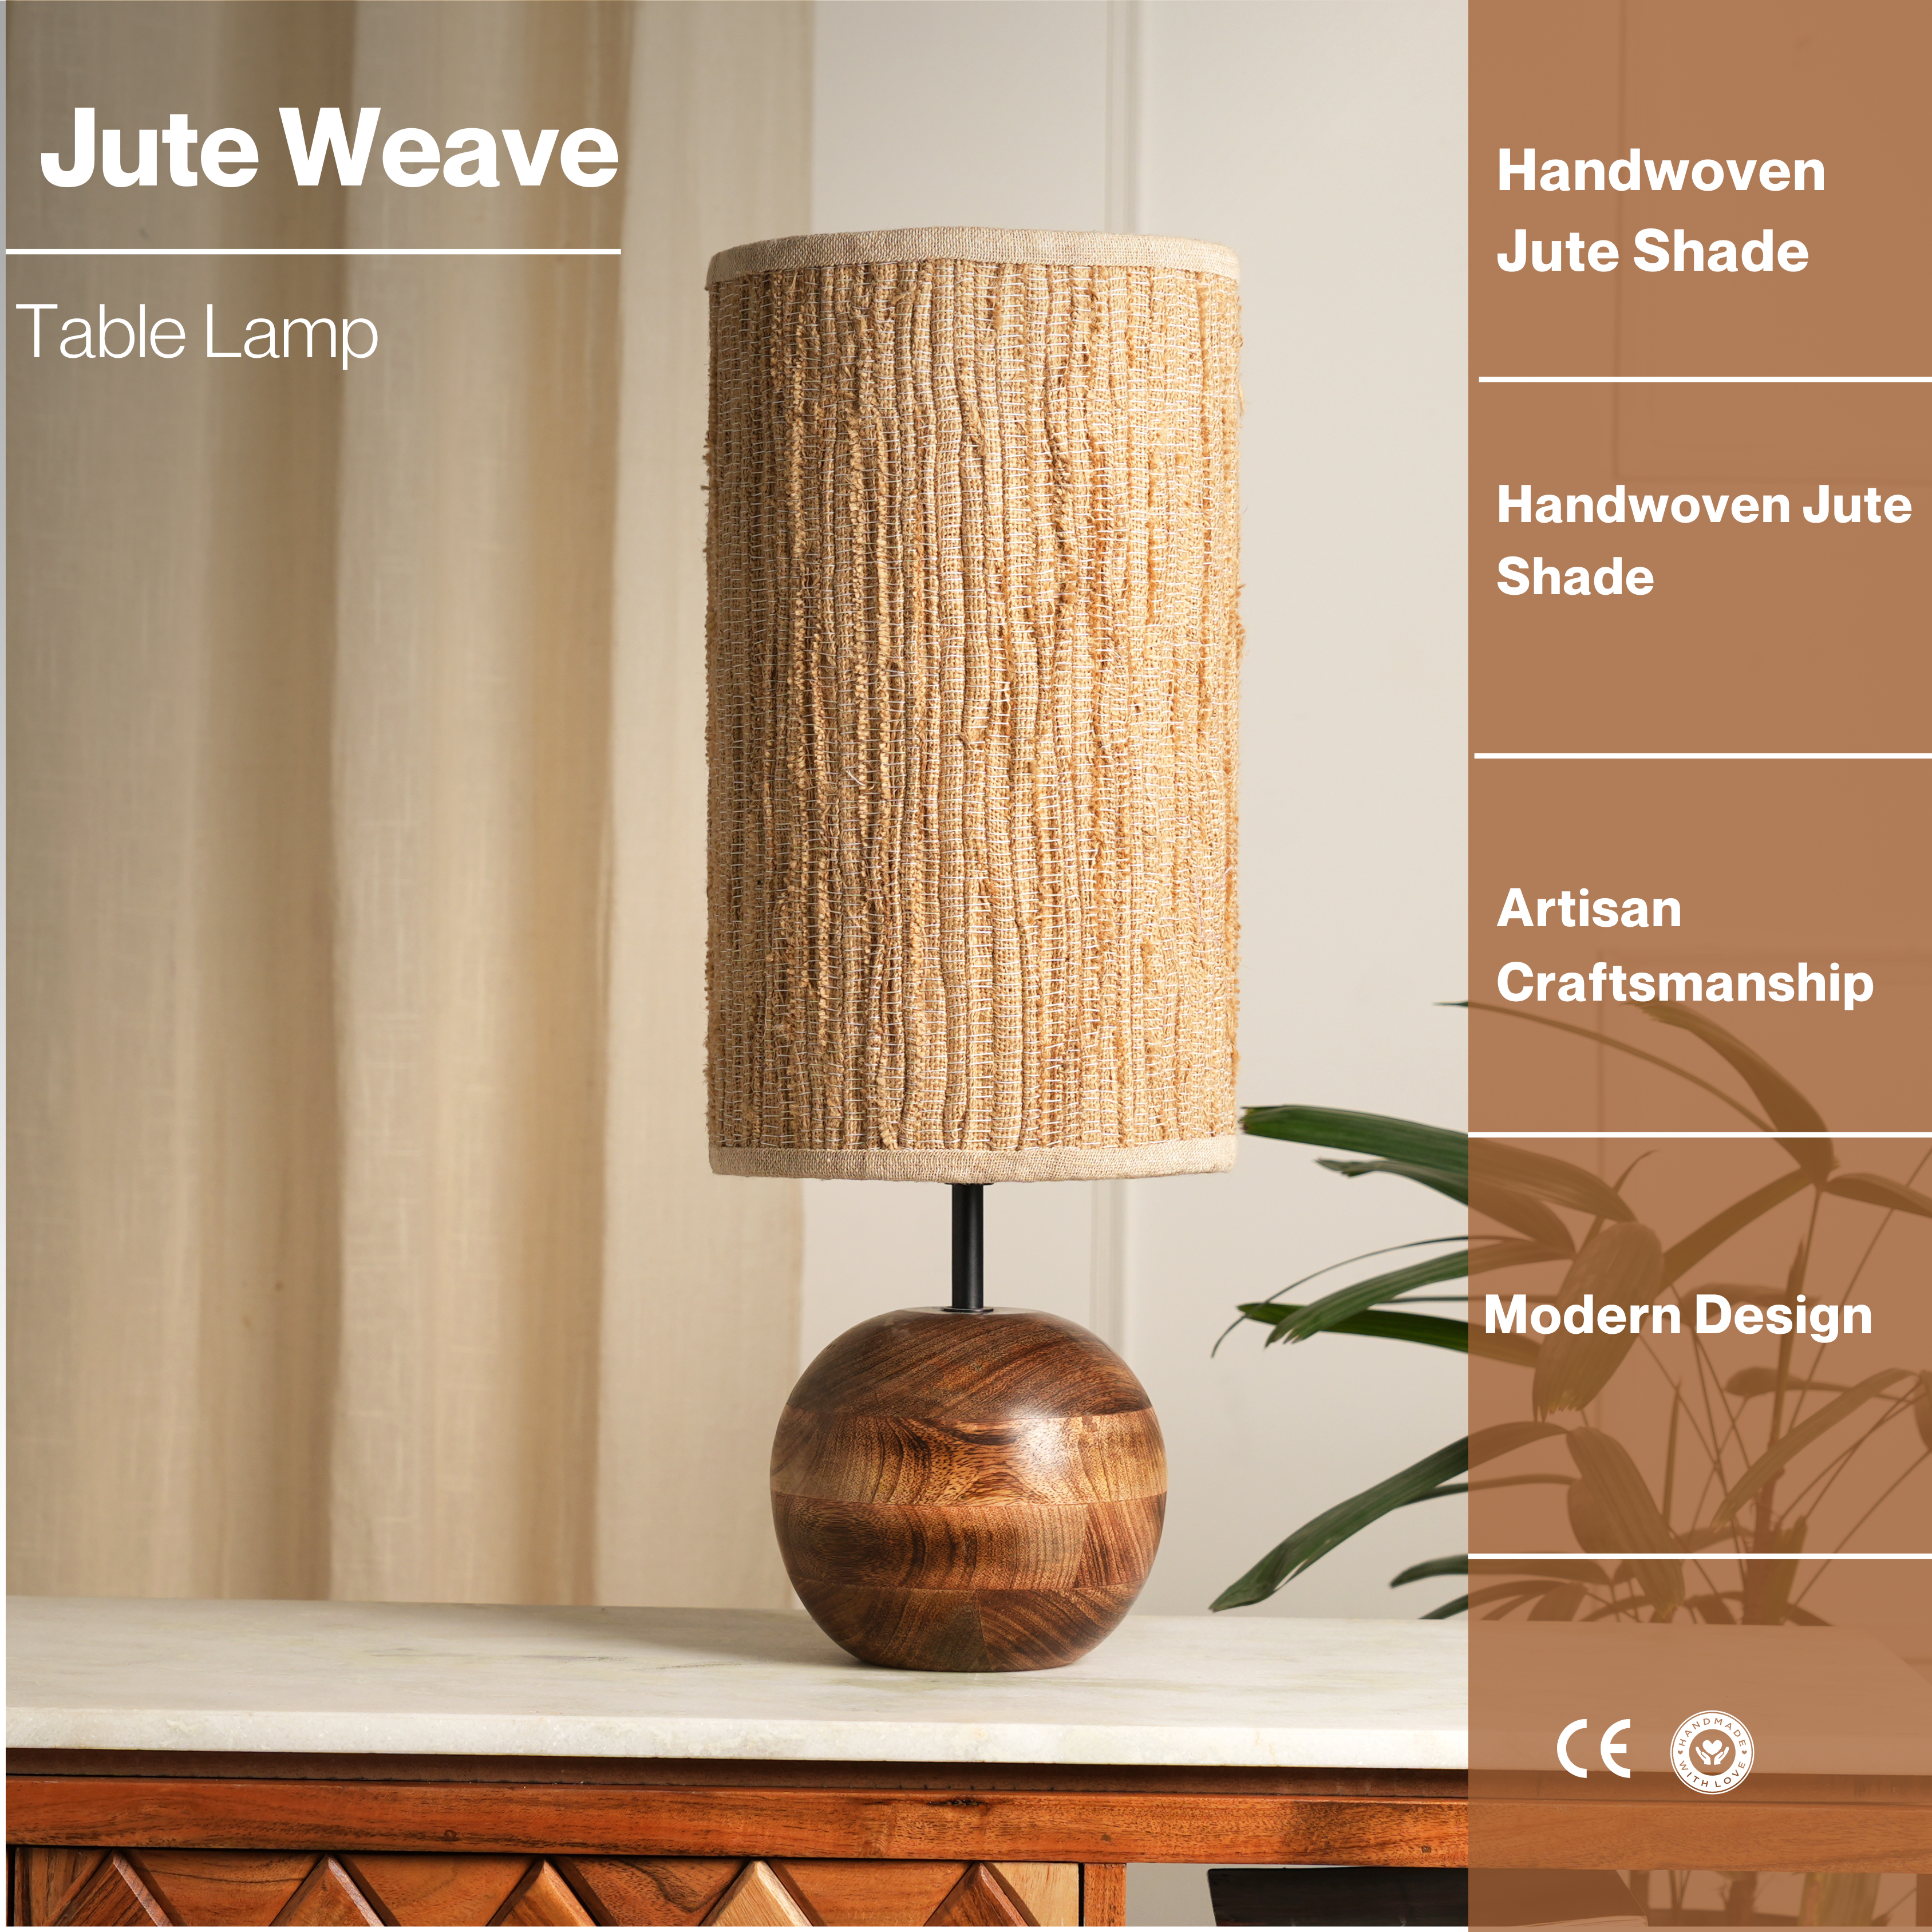 Jute Weave Lamp - Jute Weave Natural Lamp, Mango Wood Base, Handcrafted Lmpshade